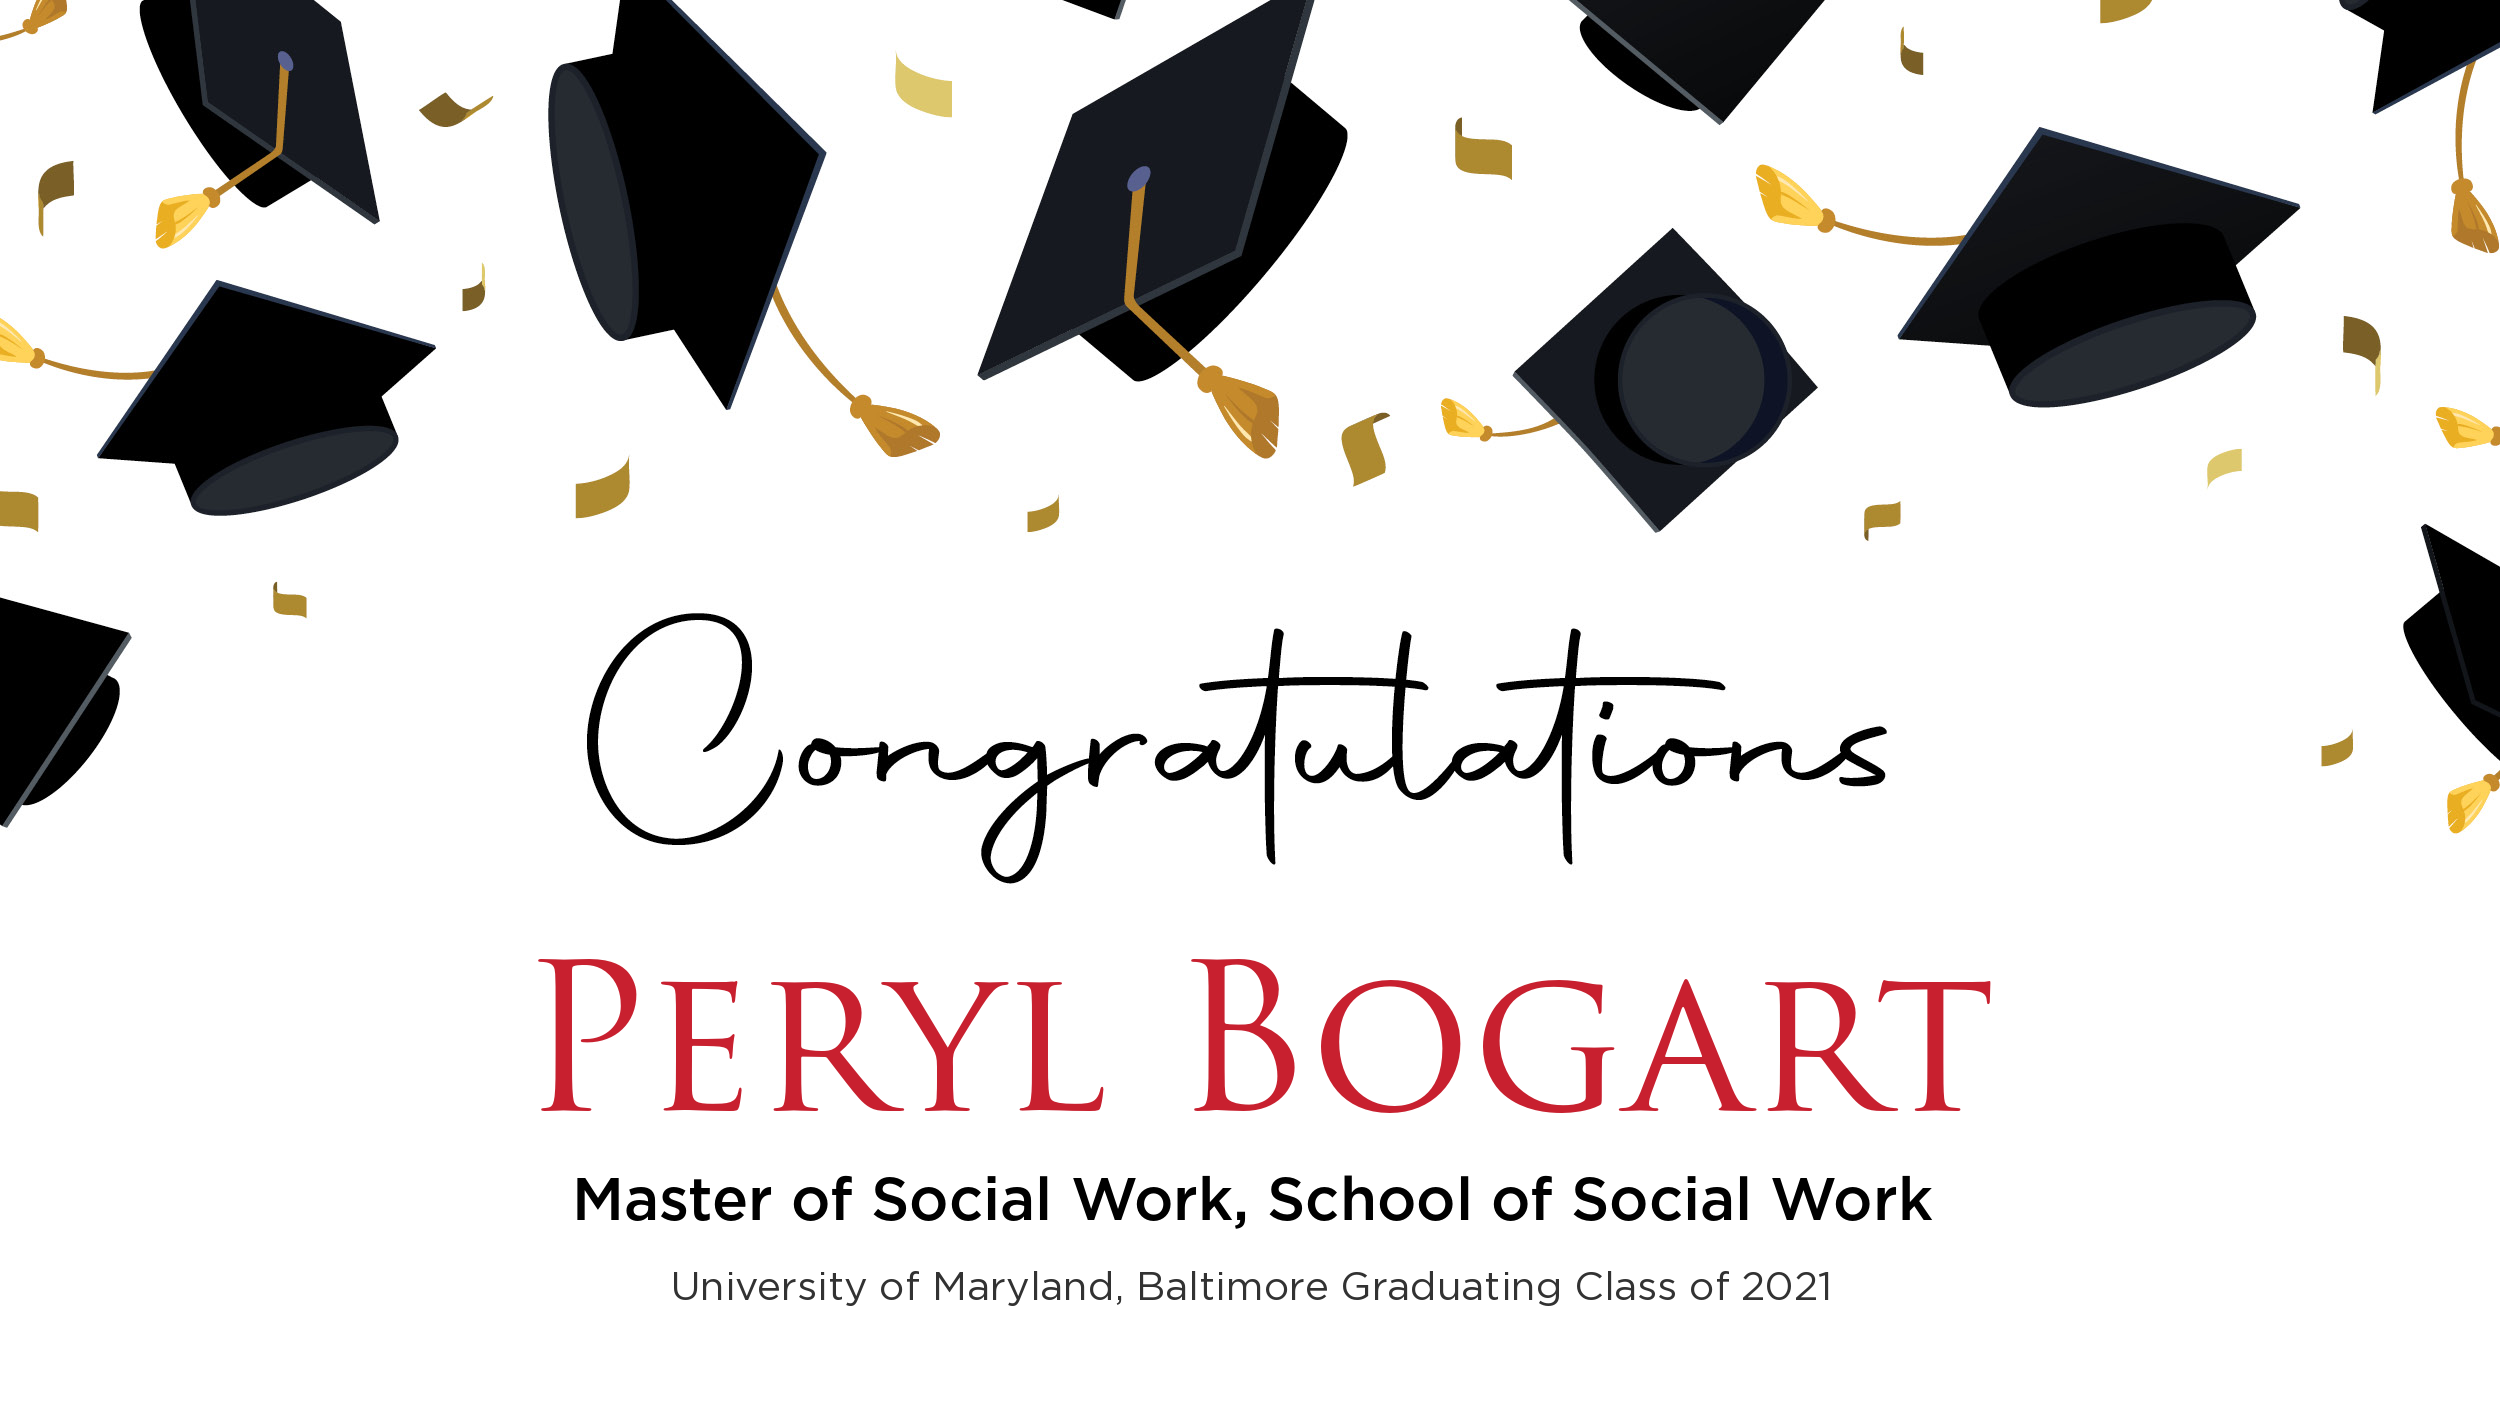 Congratulations Peryl Bogart, Master of Social Work